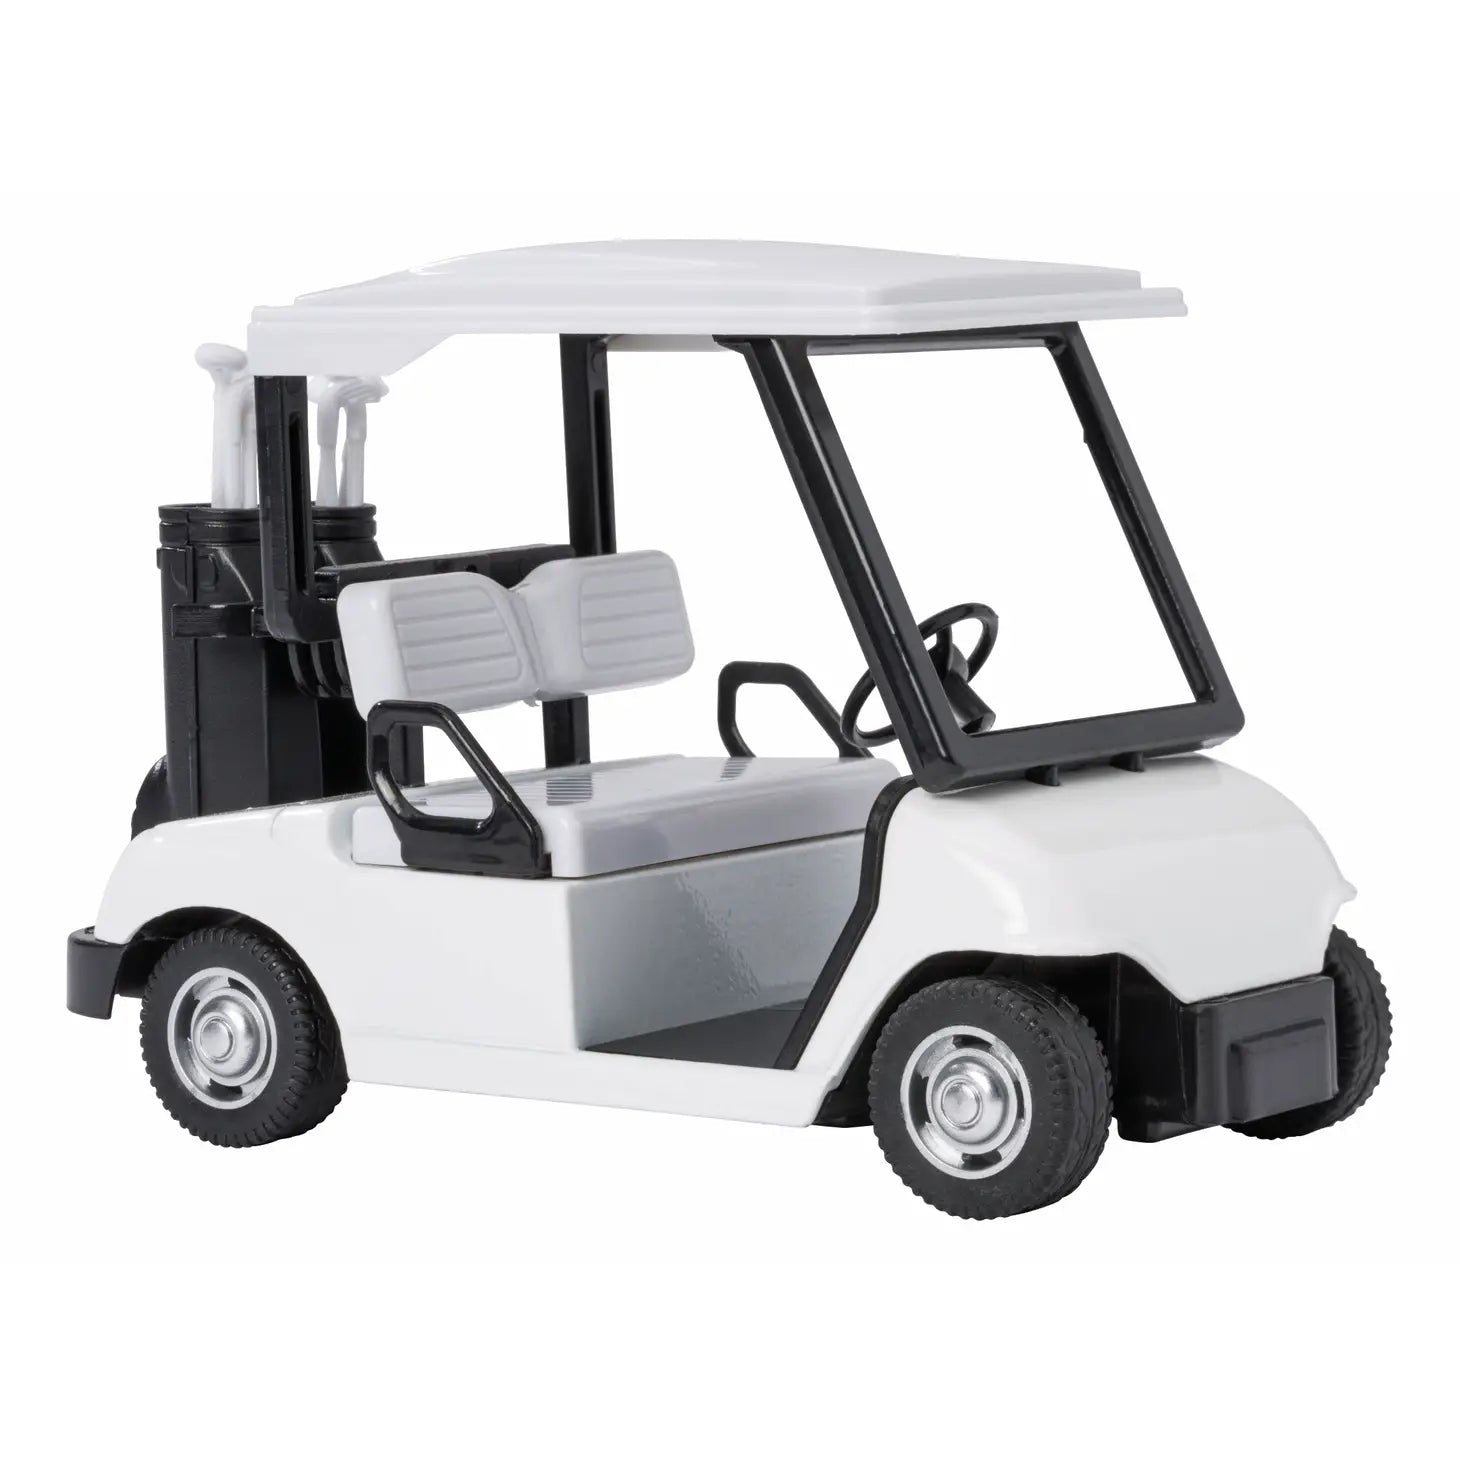 5 Die-Cast Pull Back Golf Cart